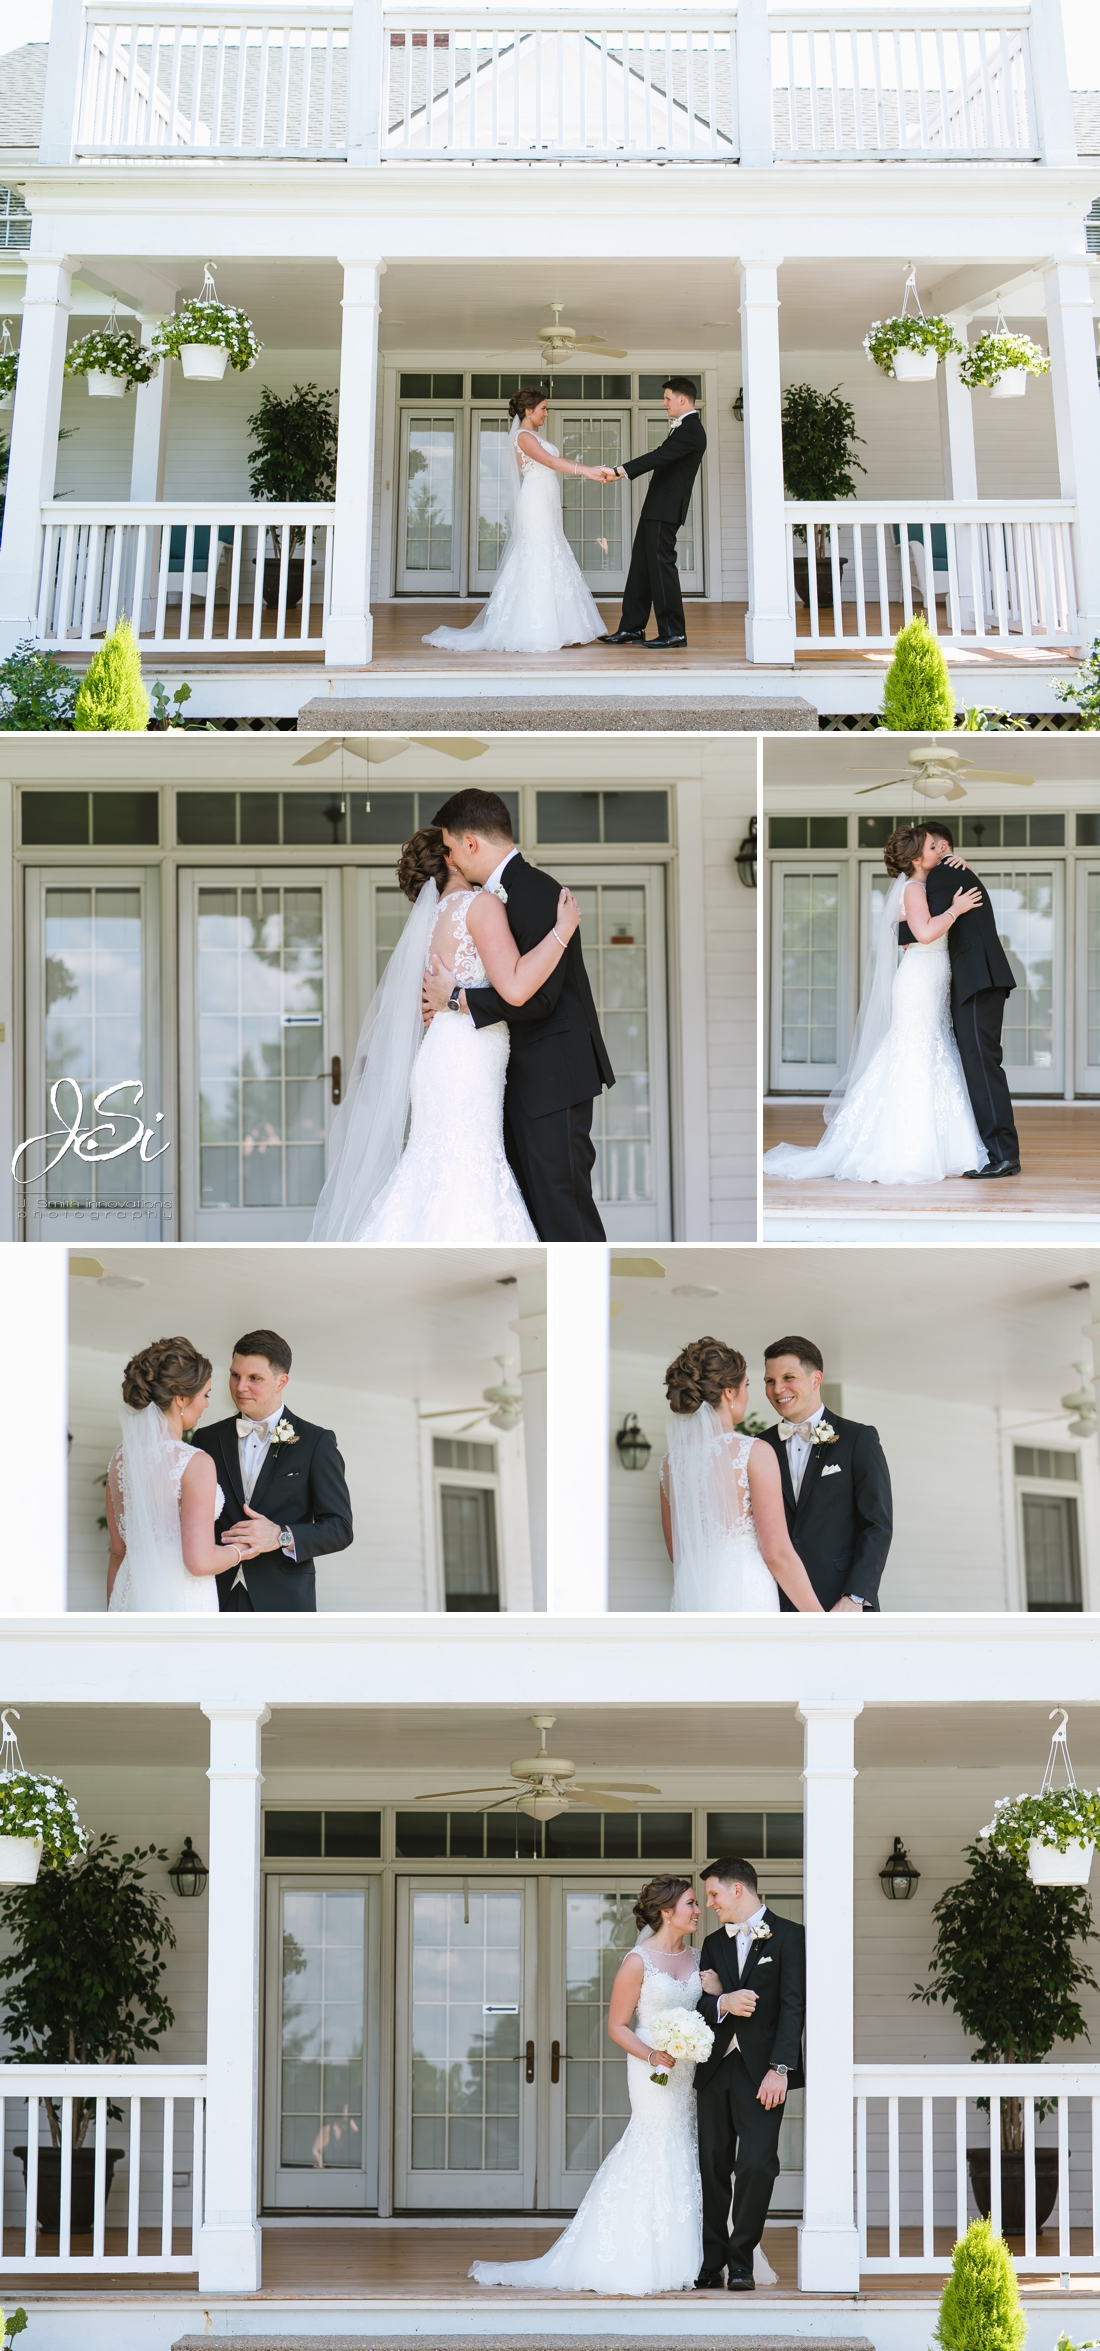 Parkville Hawthorne House elegant outdoor wedding first look portrait photo